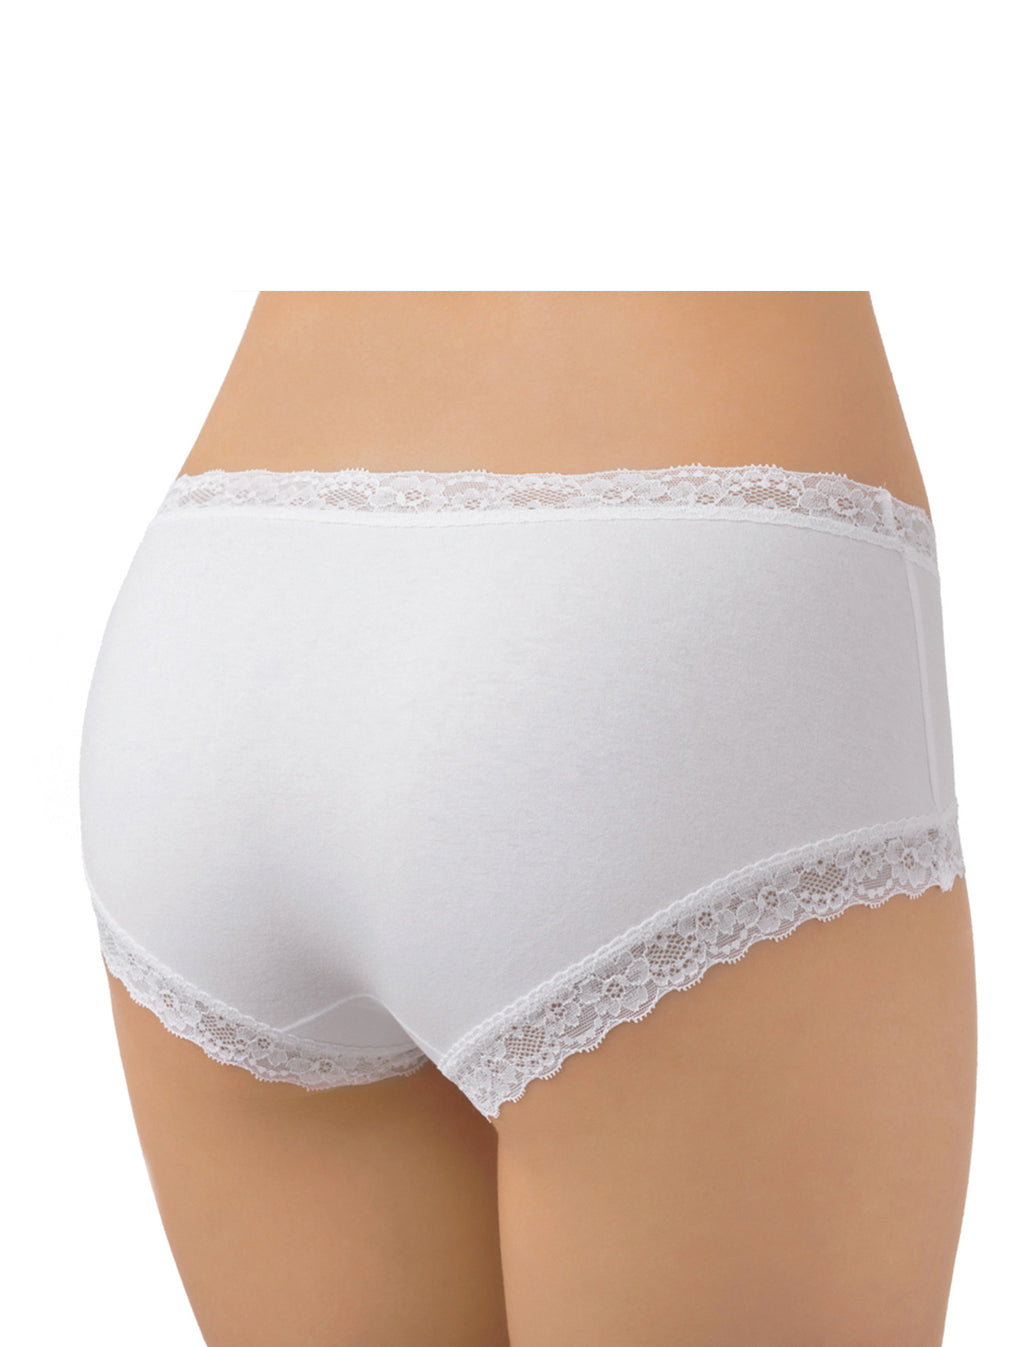 Cotton Lace Shorts Panties